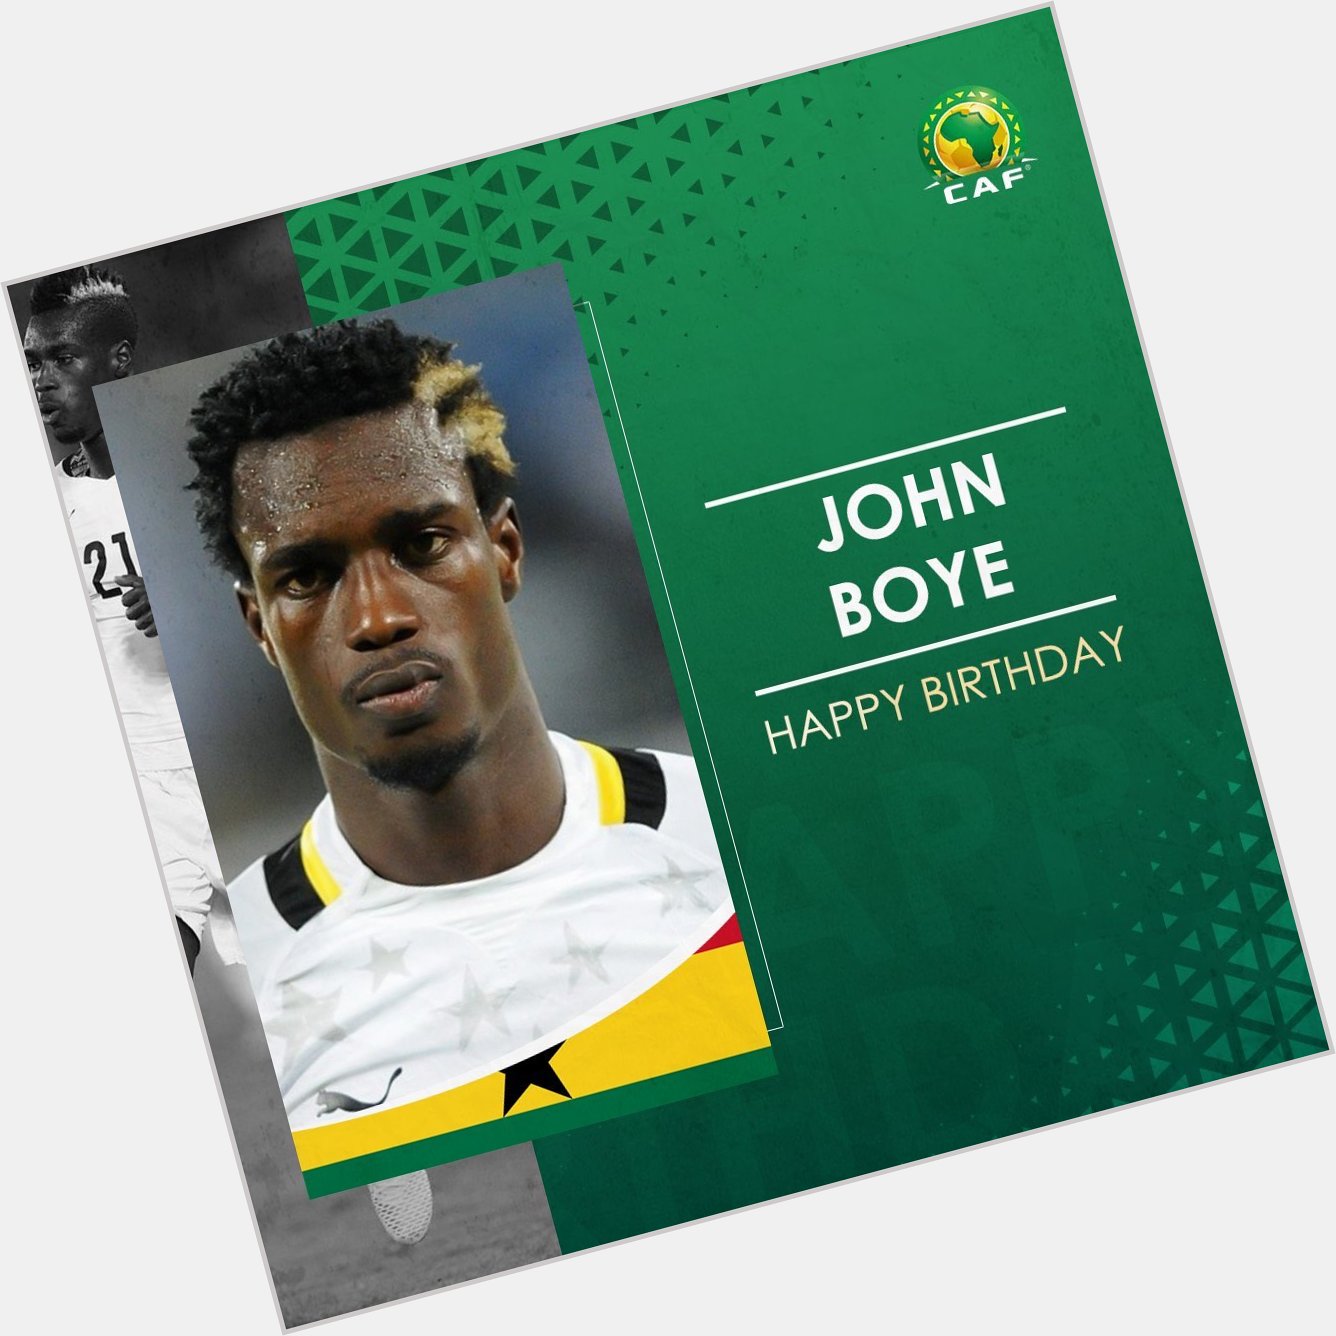 Happy birthday to John Boye. He is very very young and exuberant man . 